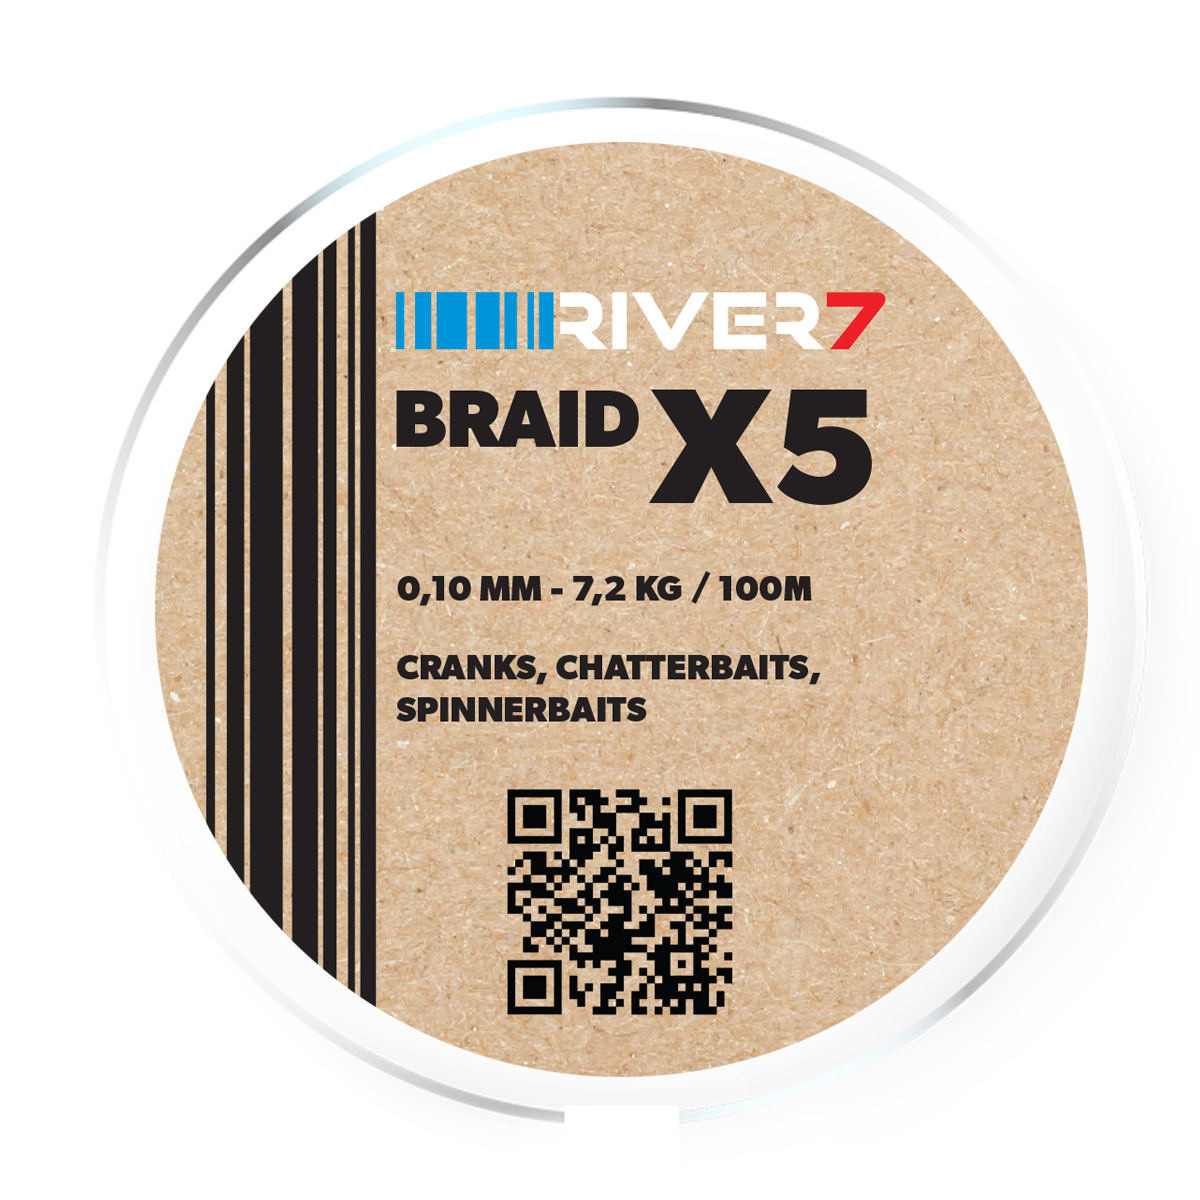 River7 X5 Braid